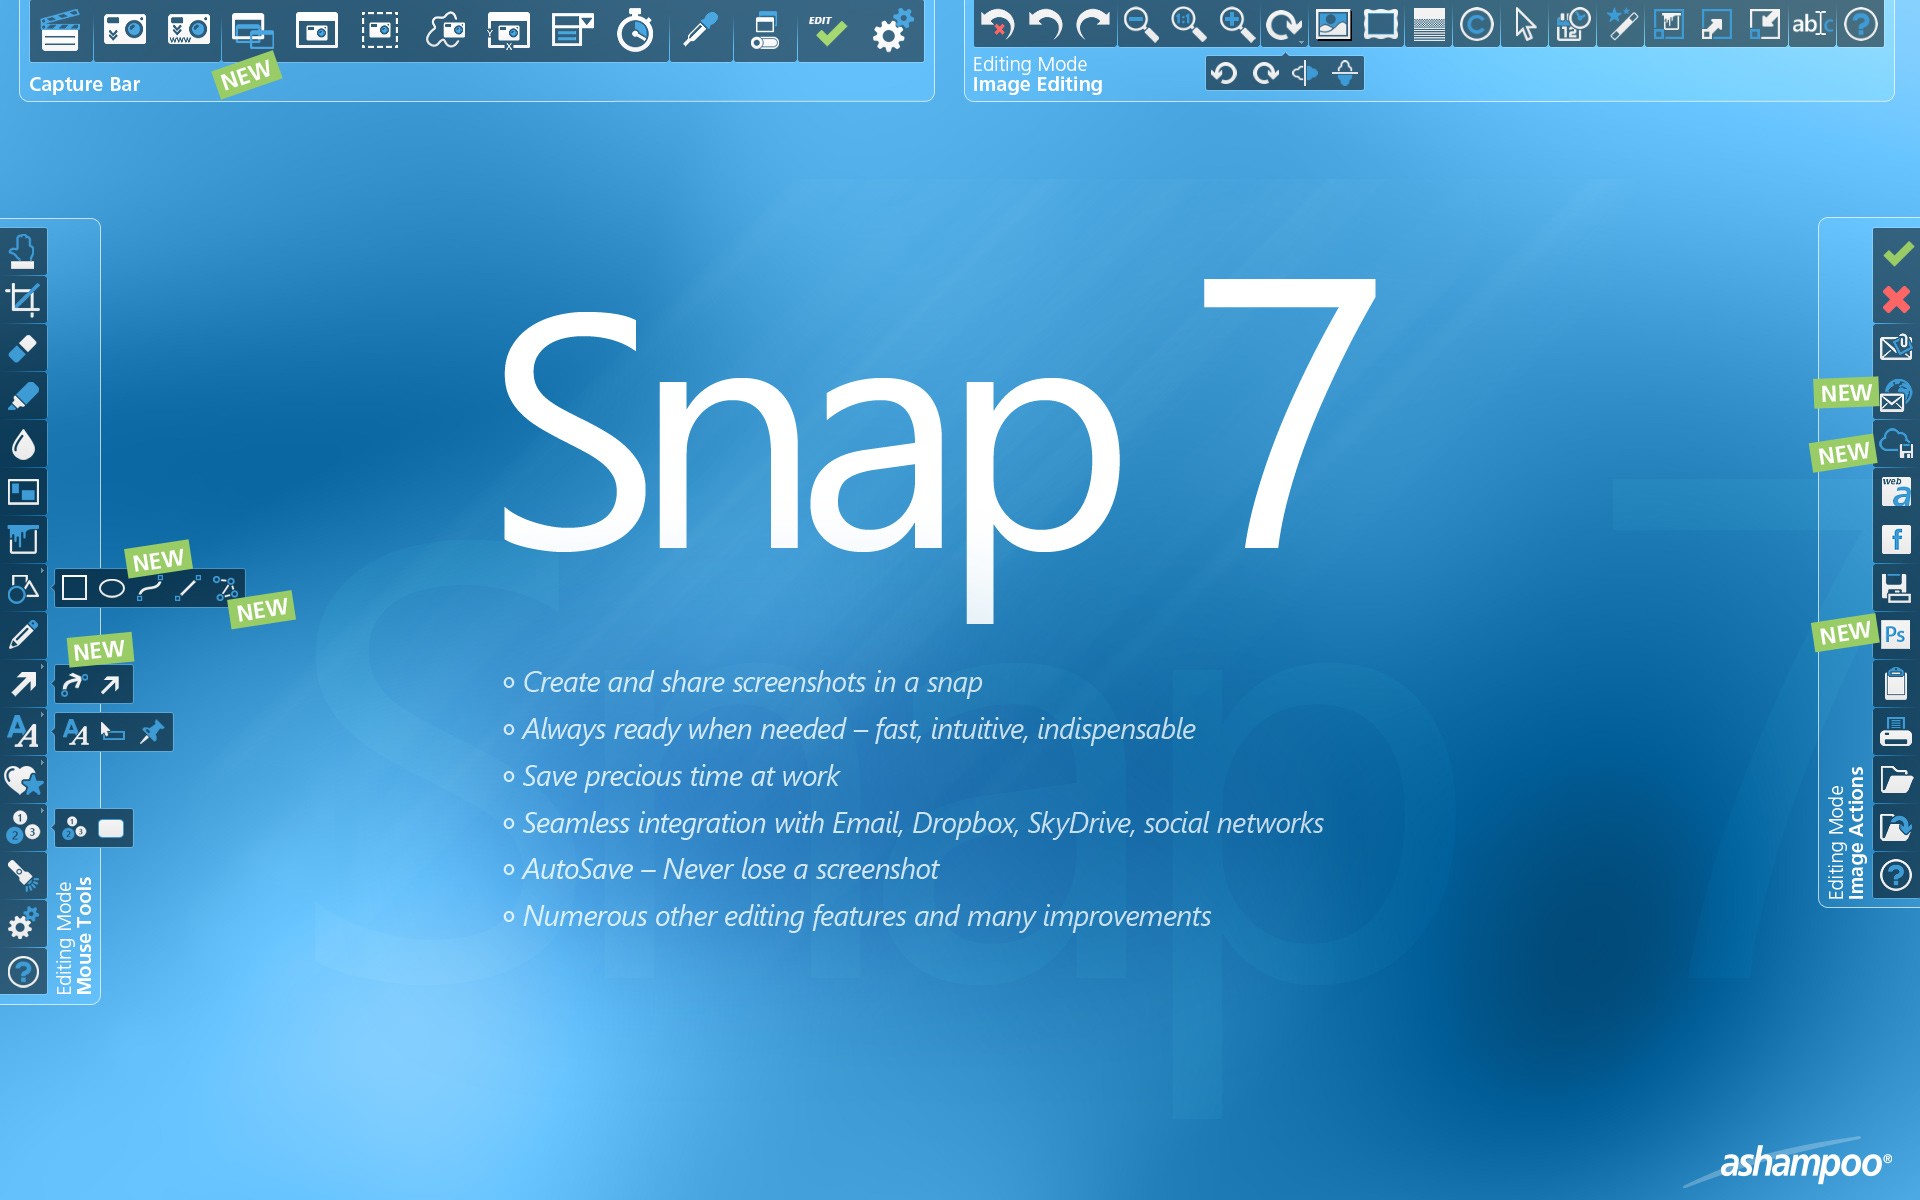 Ashampoo Snap 7 7.0.4